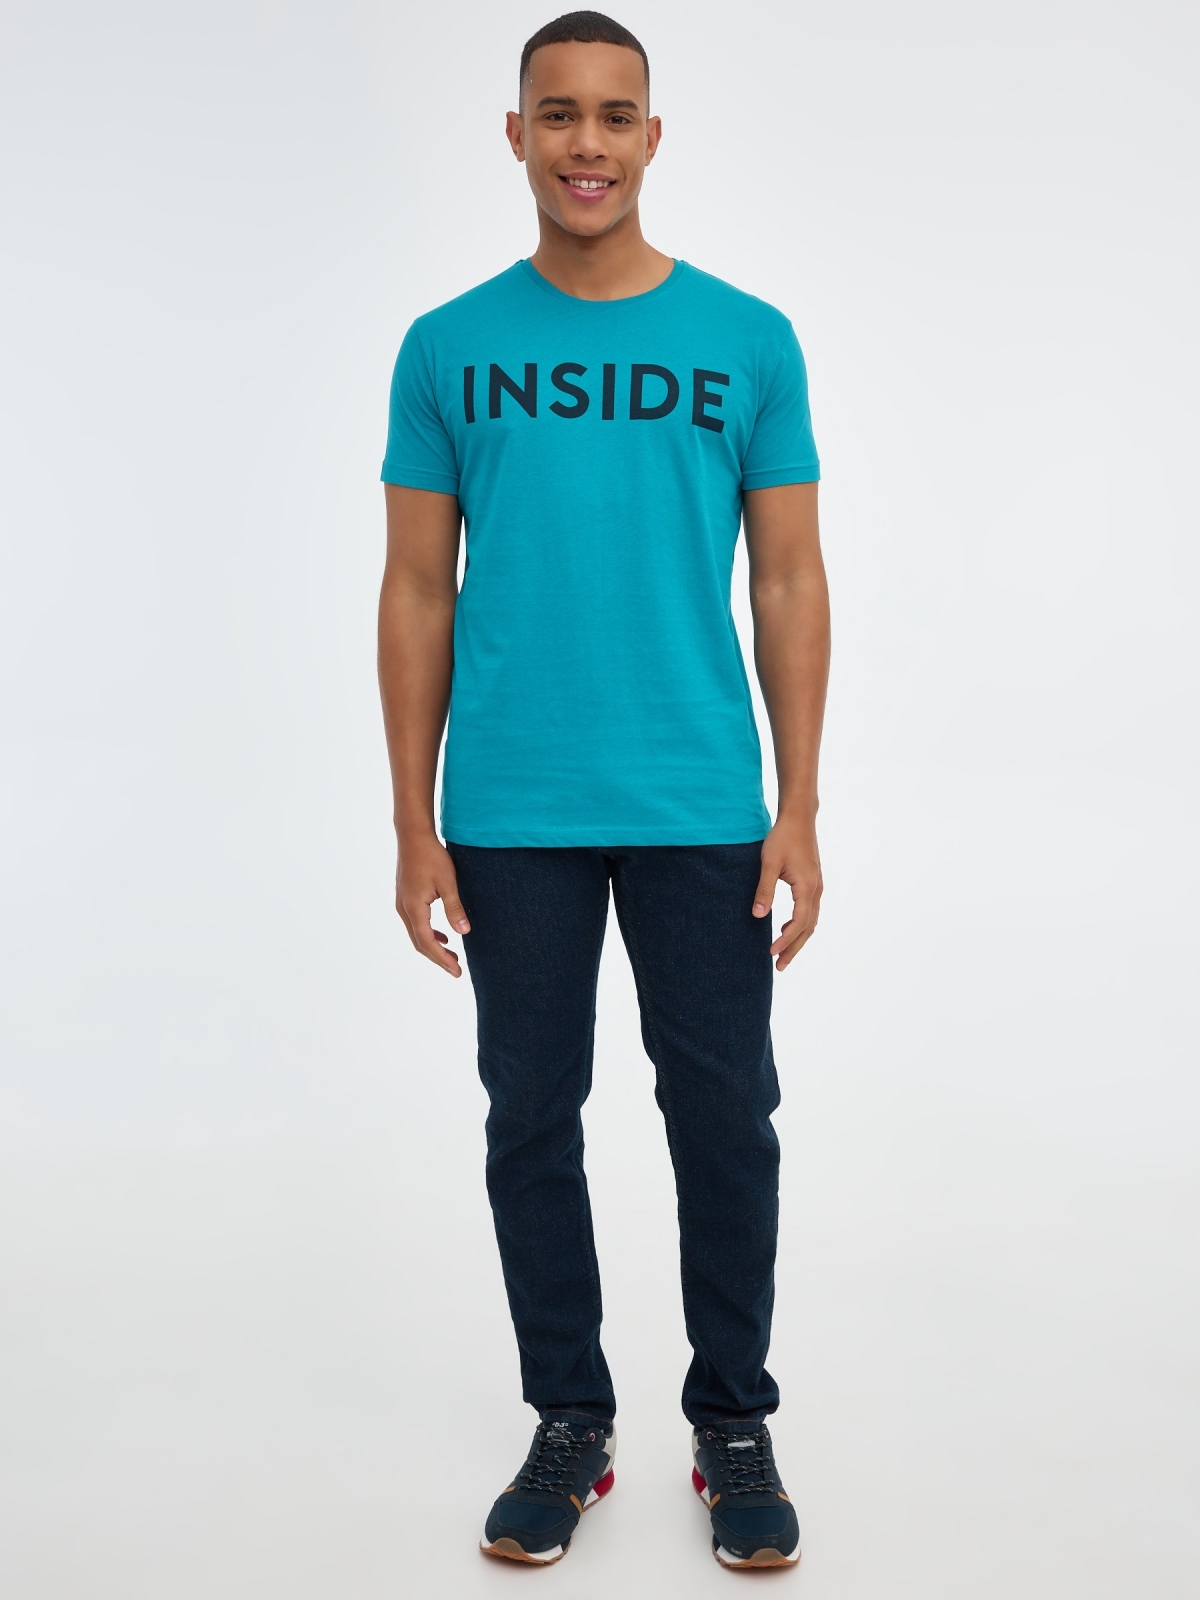 INSIDE basic T-shirt blue front view